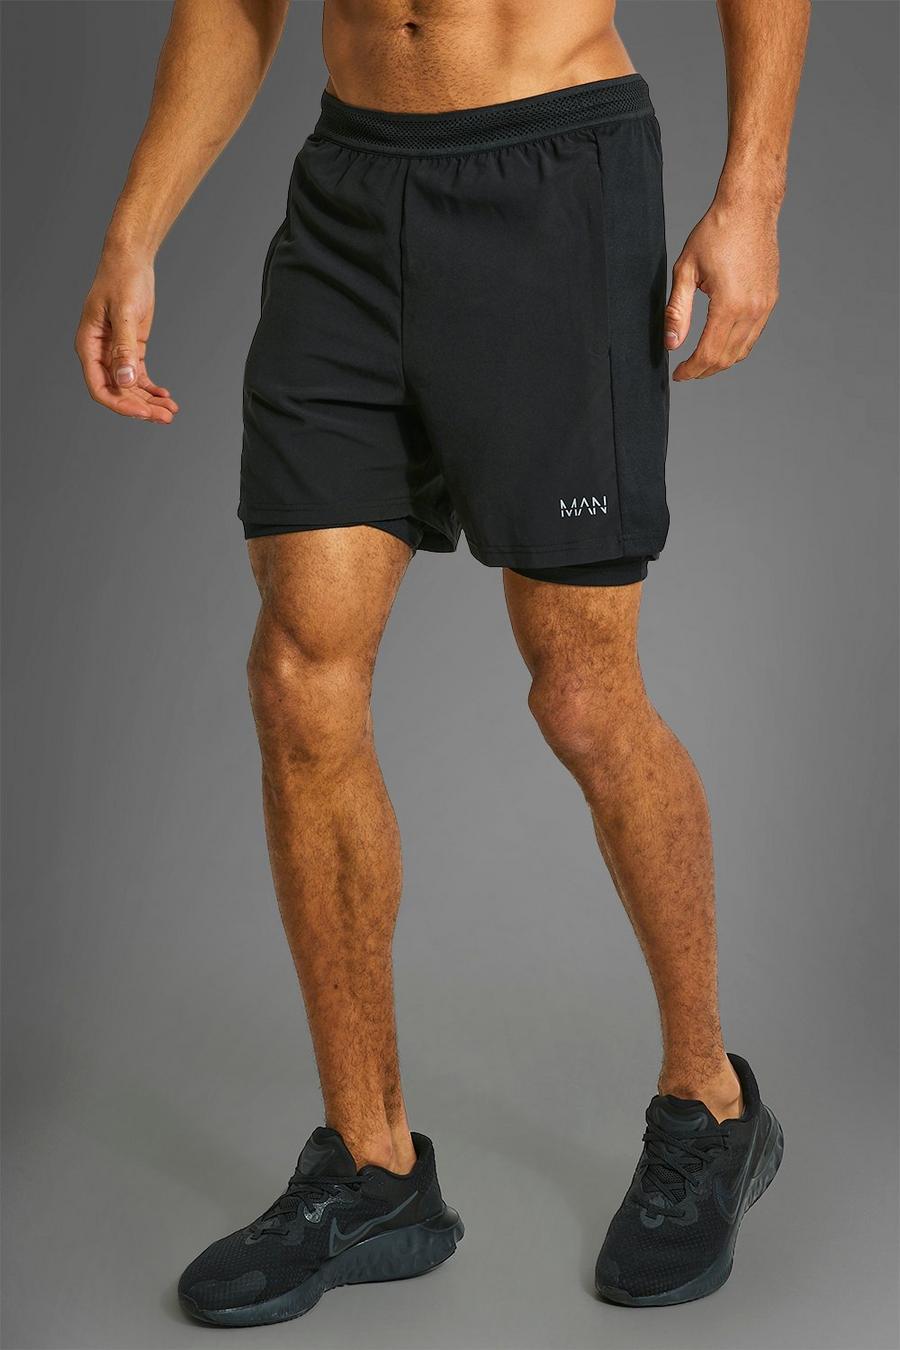 Pantaloncini Man Active Gym per alta performance 2 in 1, Black negro image number 1